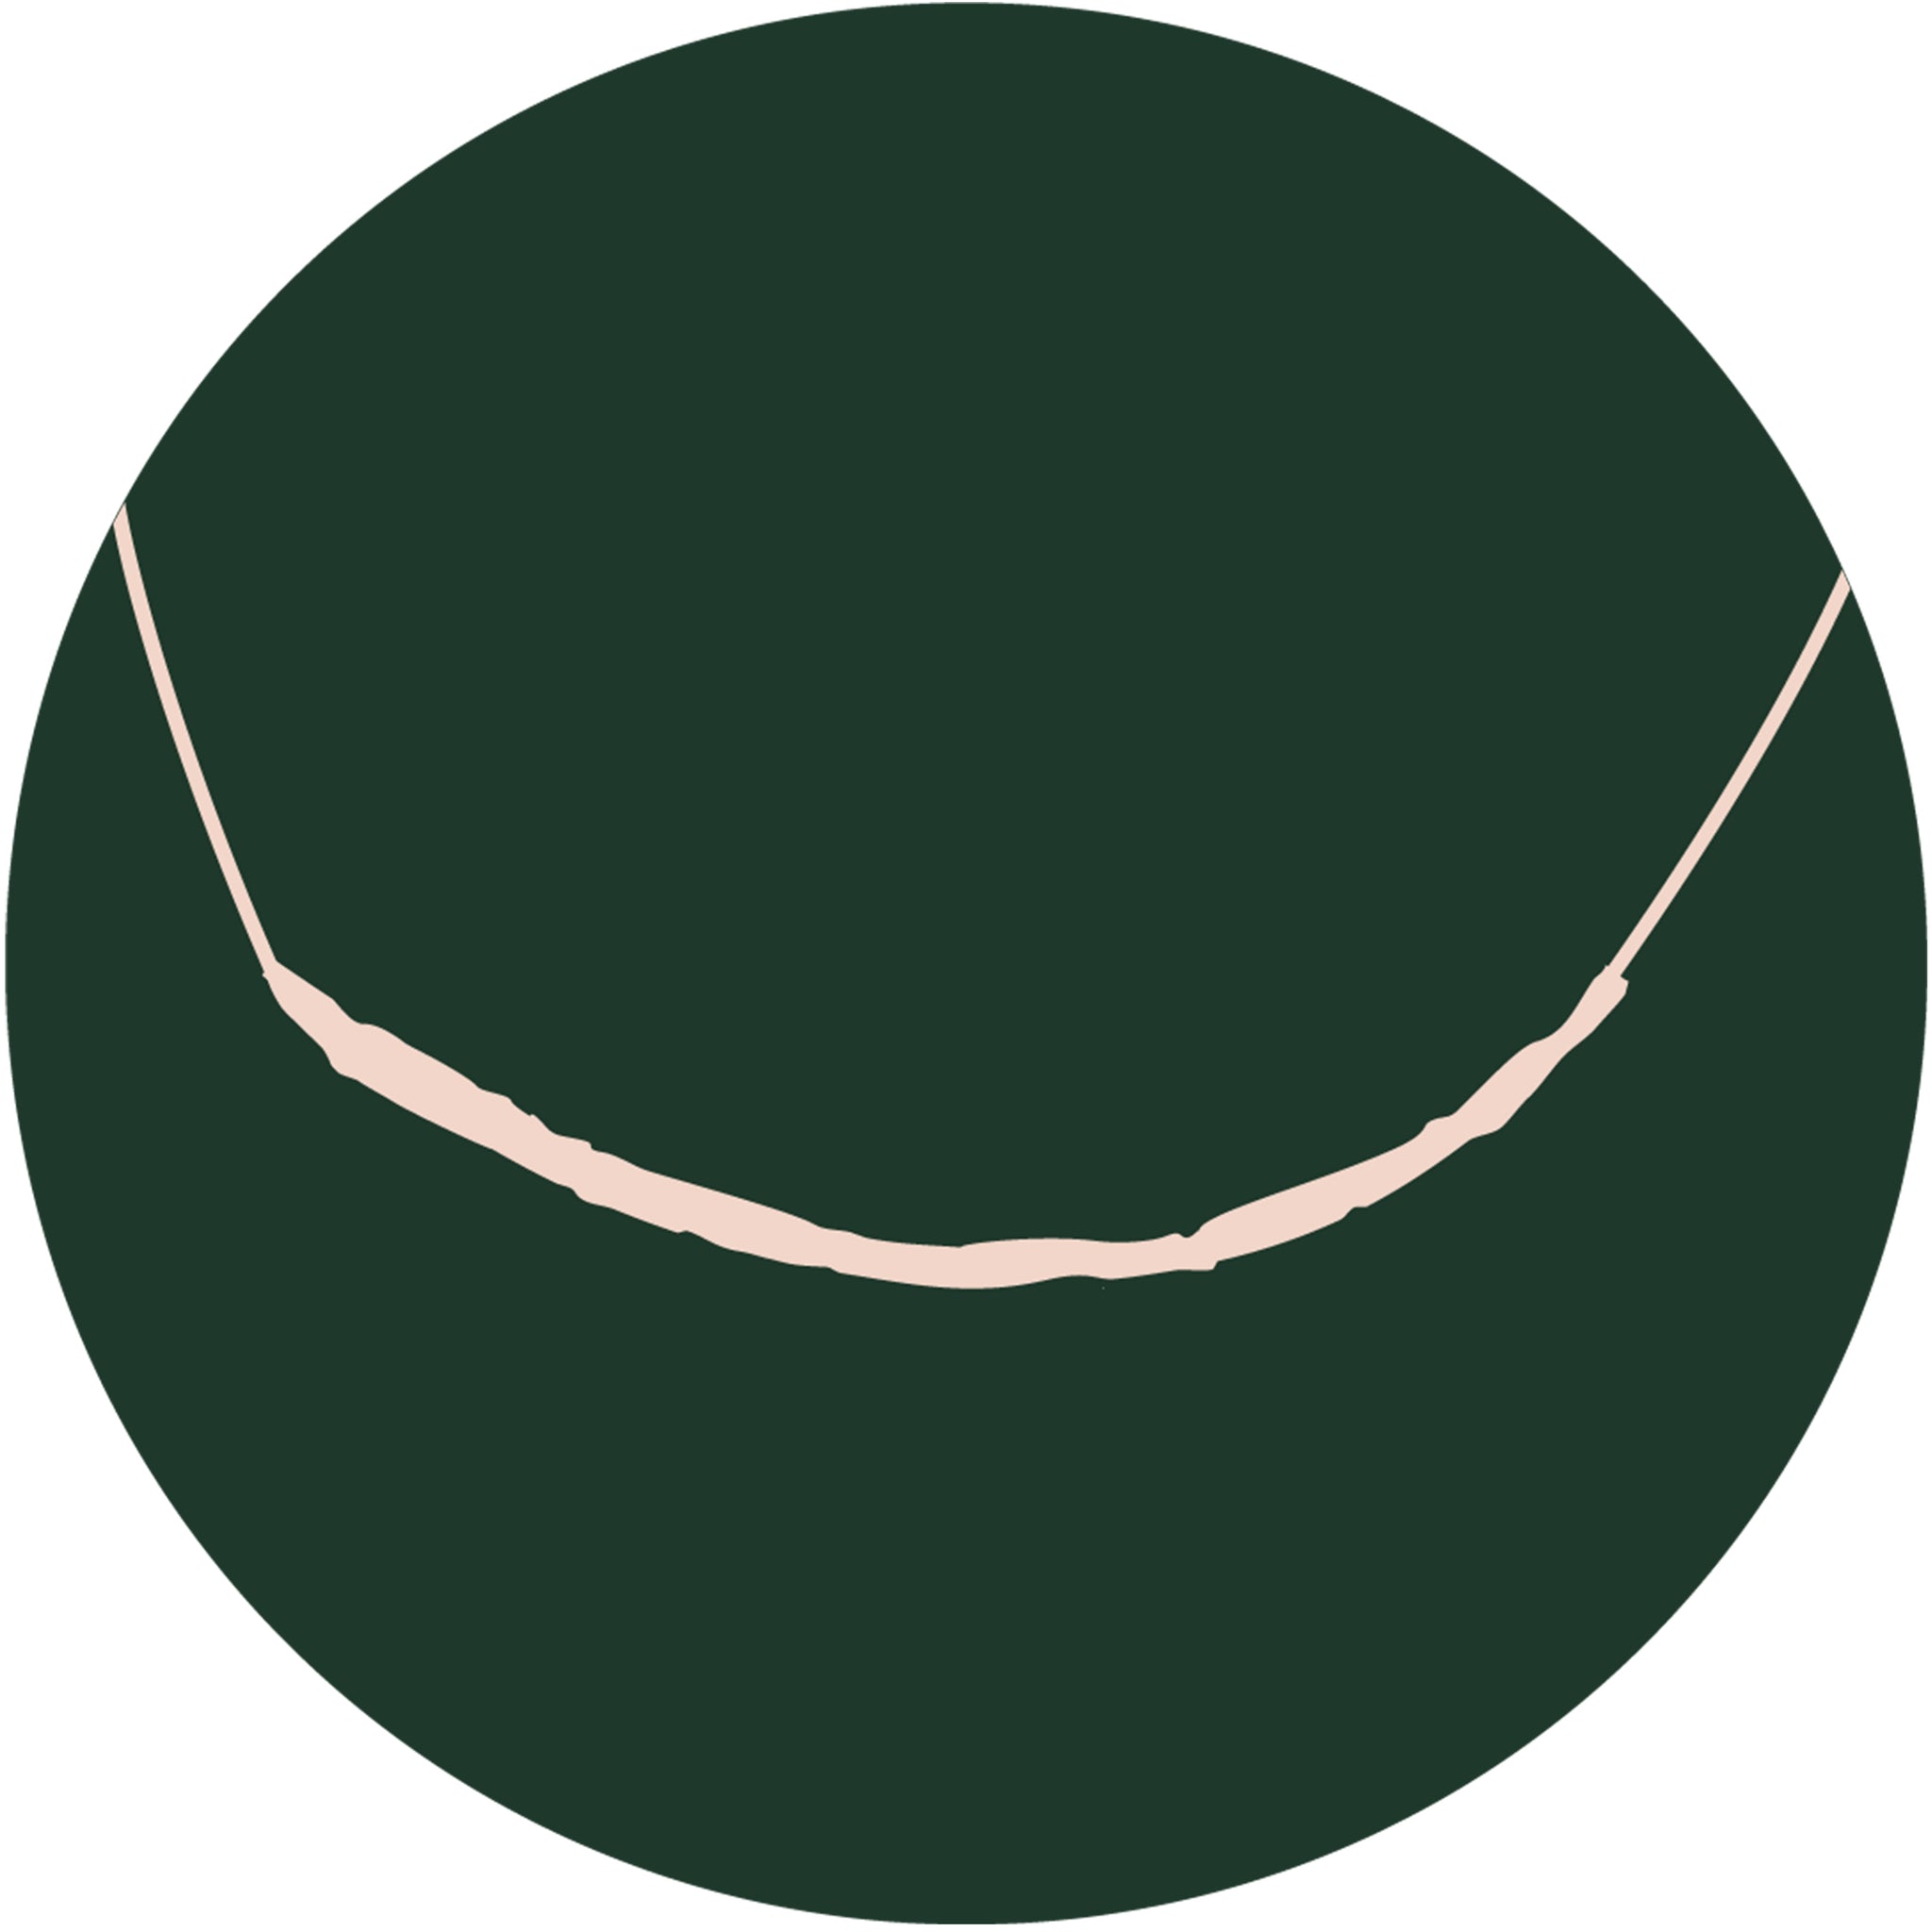 illustration of plain bar style on green circle background 